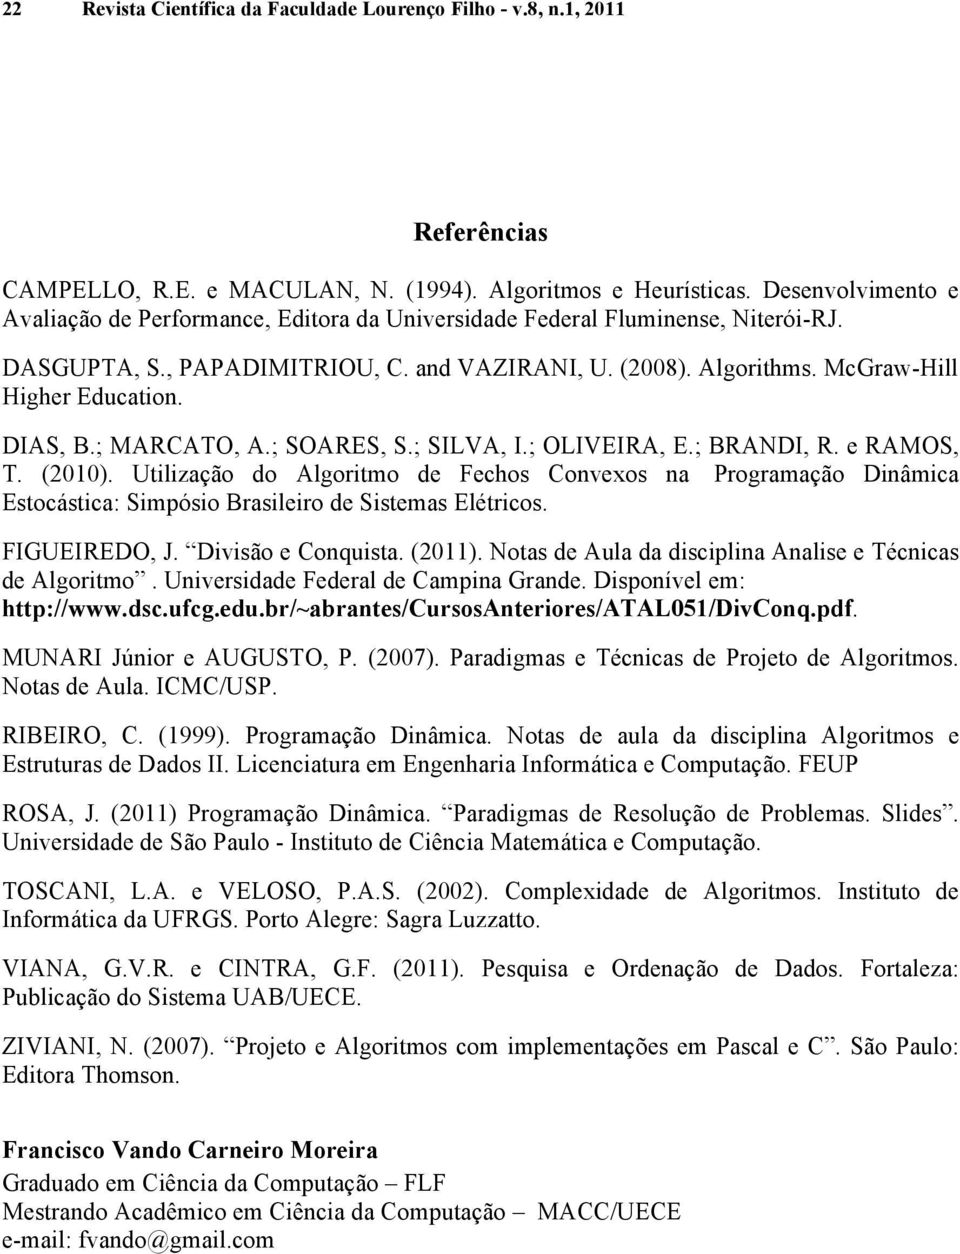 DIAS, B.; MARCATO, A.; SOARES, S.; SILVA, I.; OLIVEIRA, E.; BRANDI, R. e RAMOS, T. (2010).